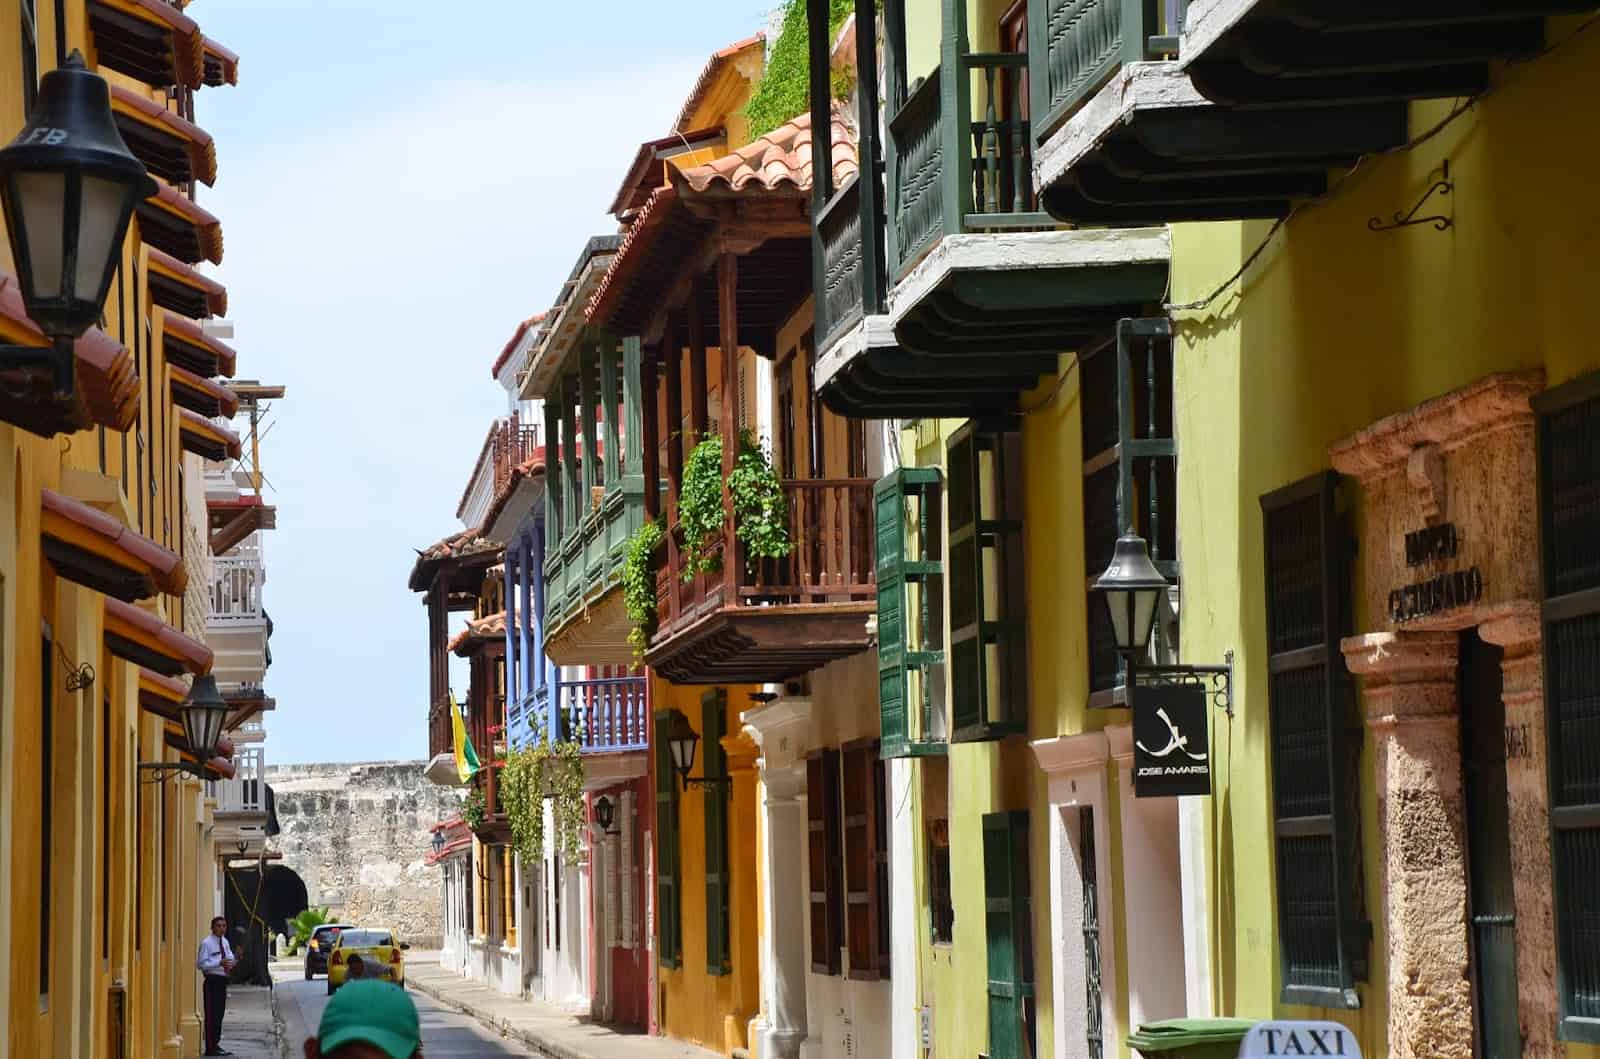 A street in Cartagena, Bolívar, Colombia